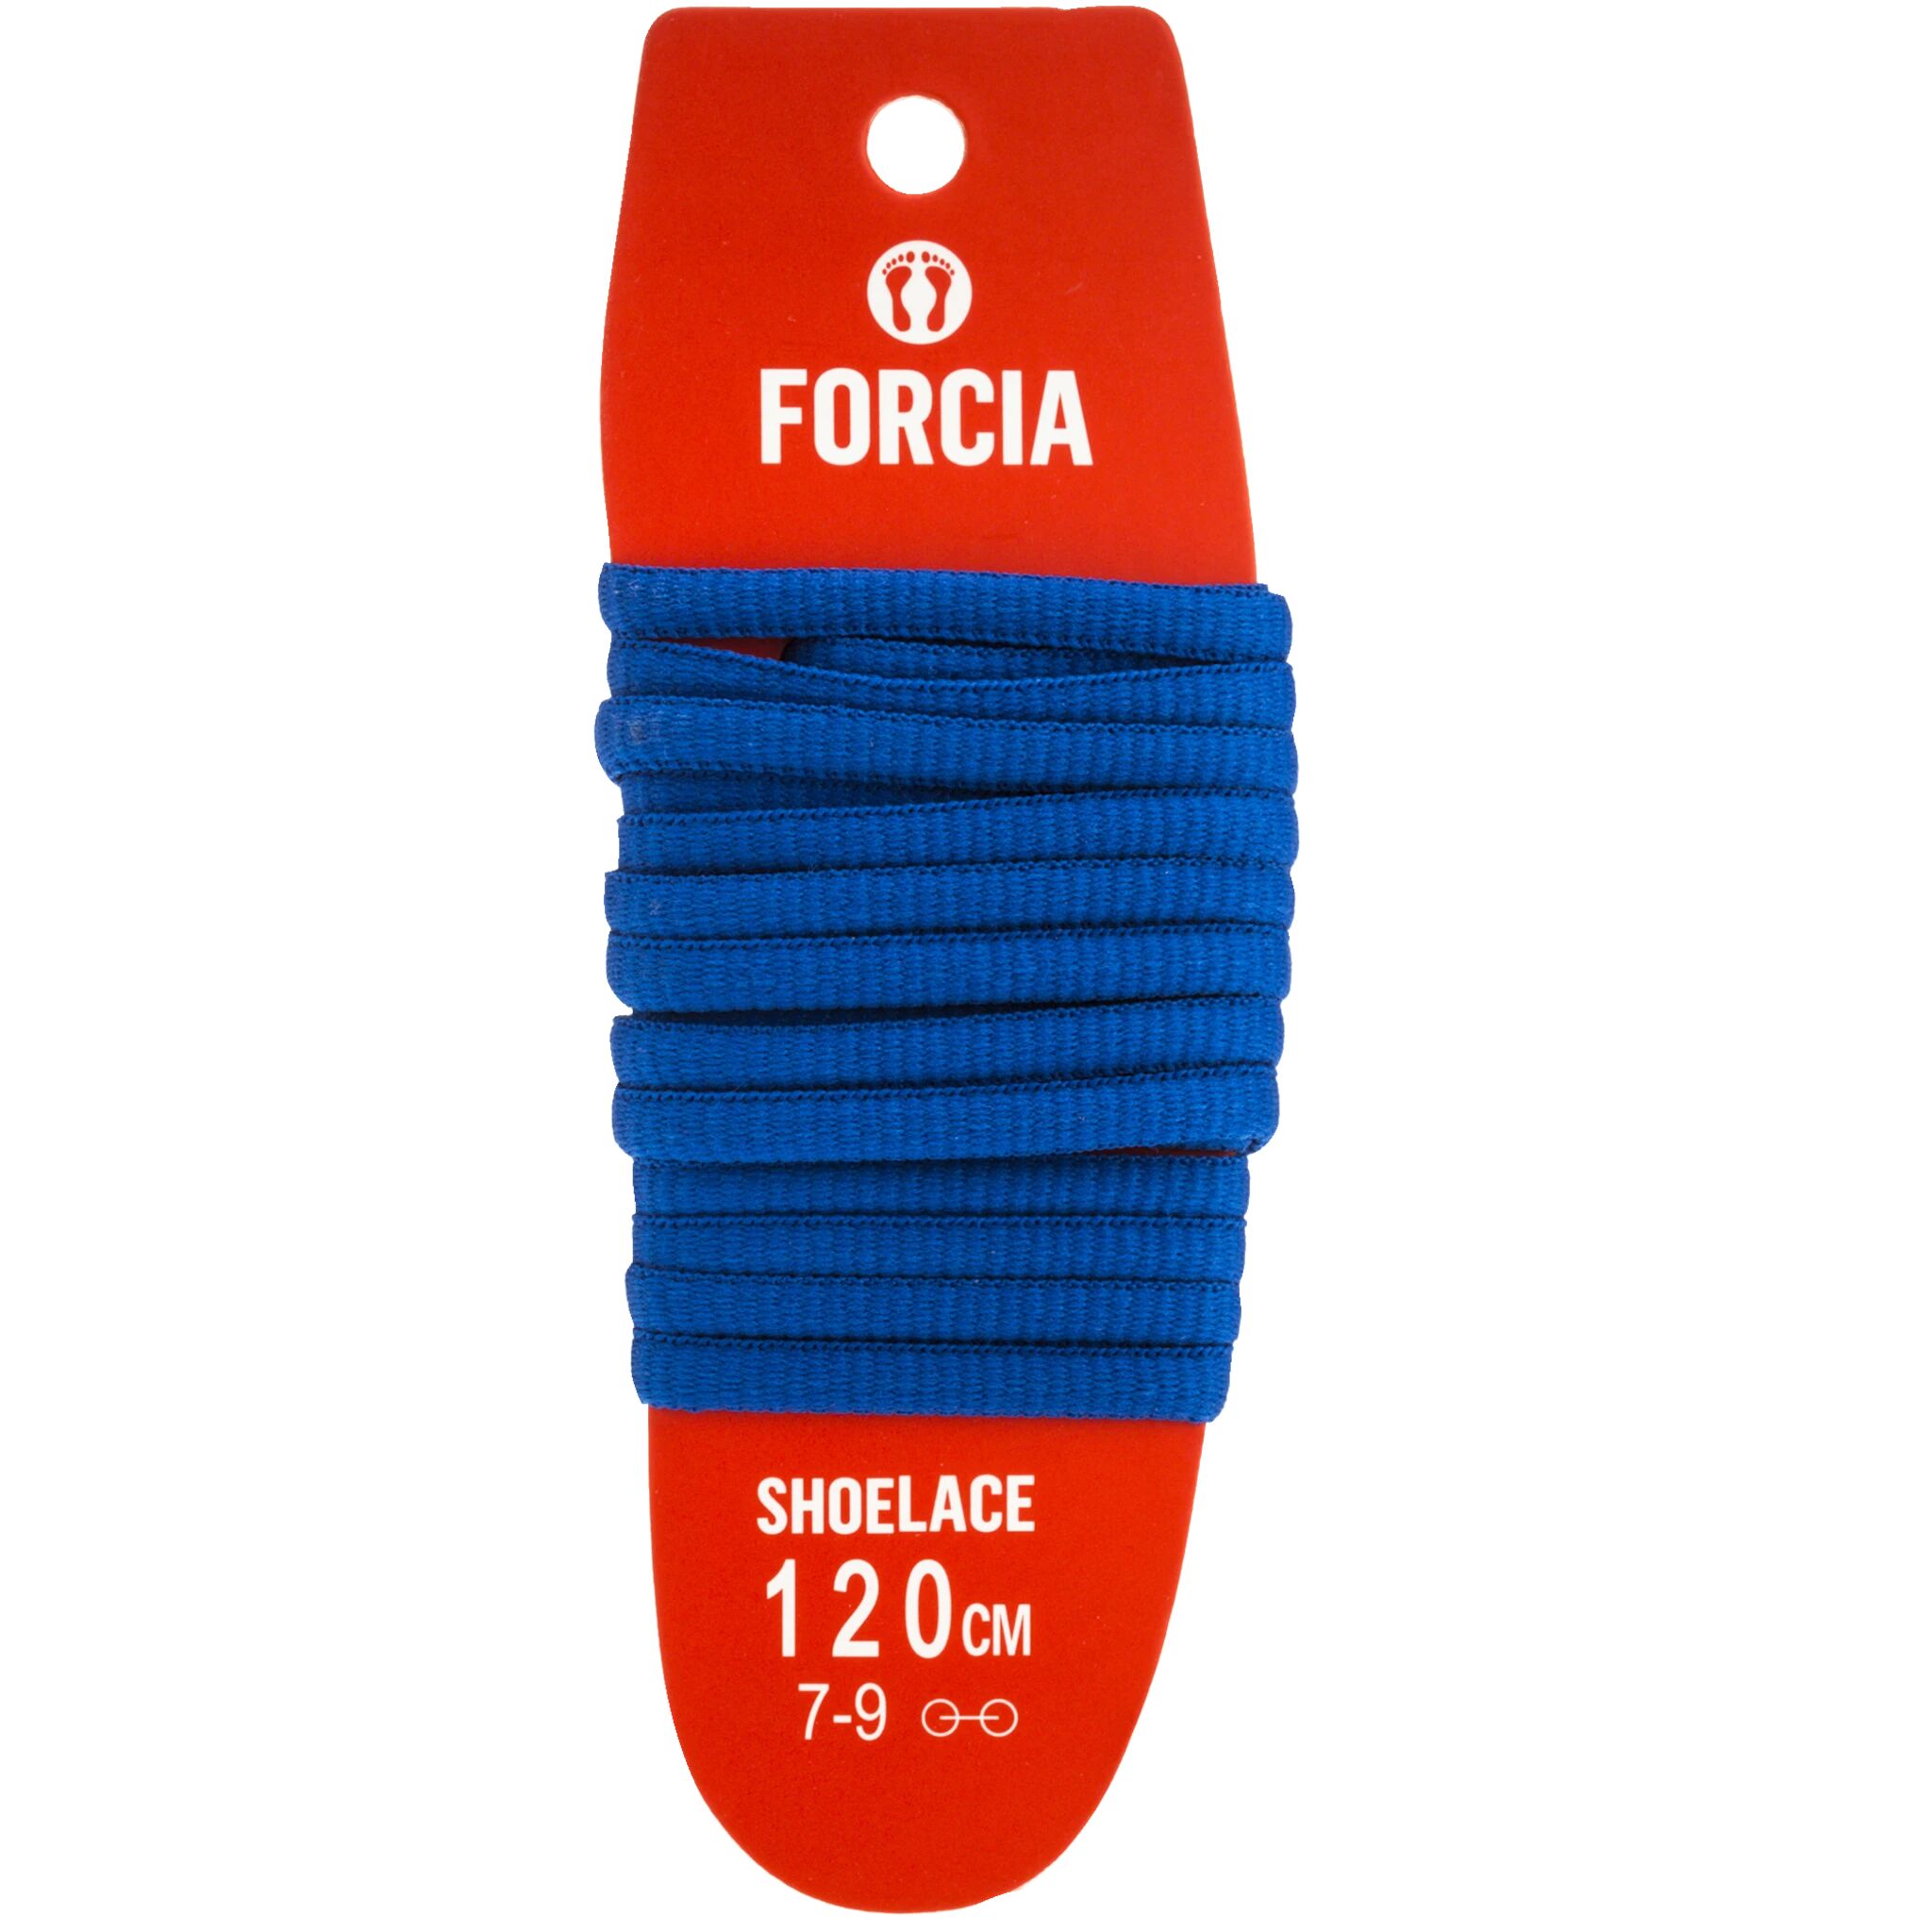 Forcia ShoeLace 120cm, skolisser 120cm Blue